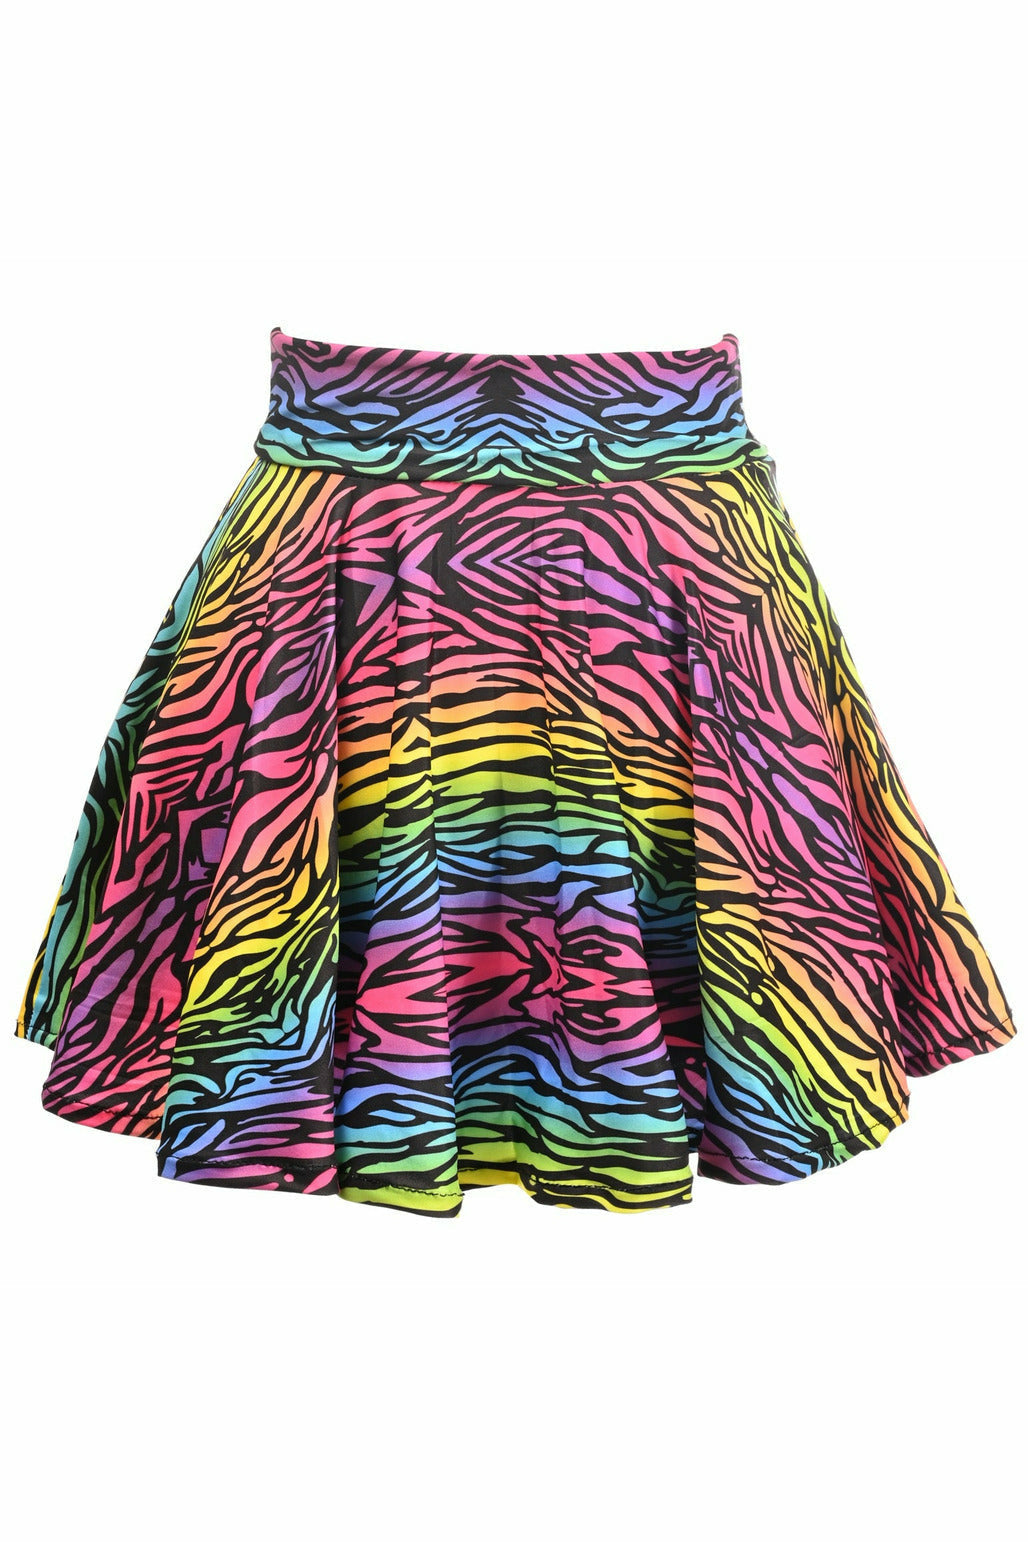 Rainbow Animal Print Stretch Lycra Skirt - Lust Charm 